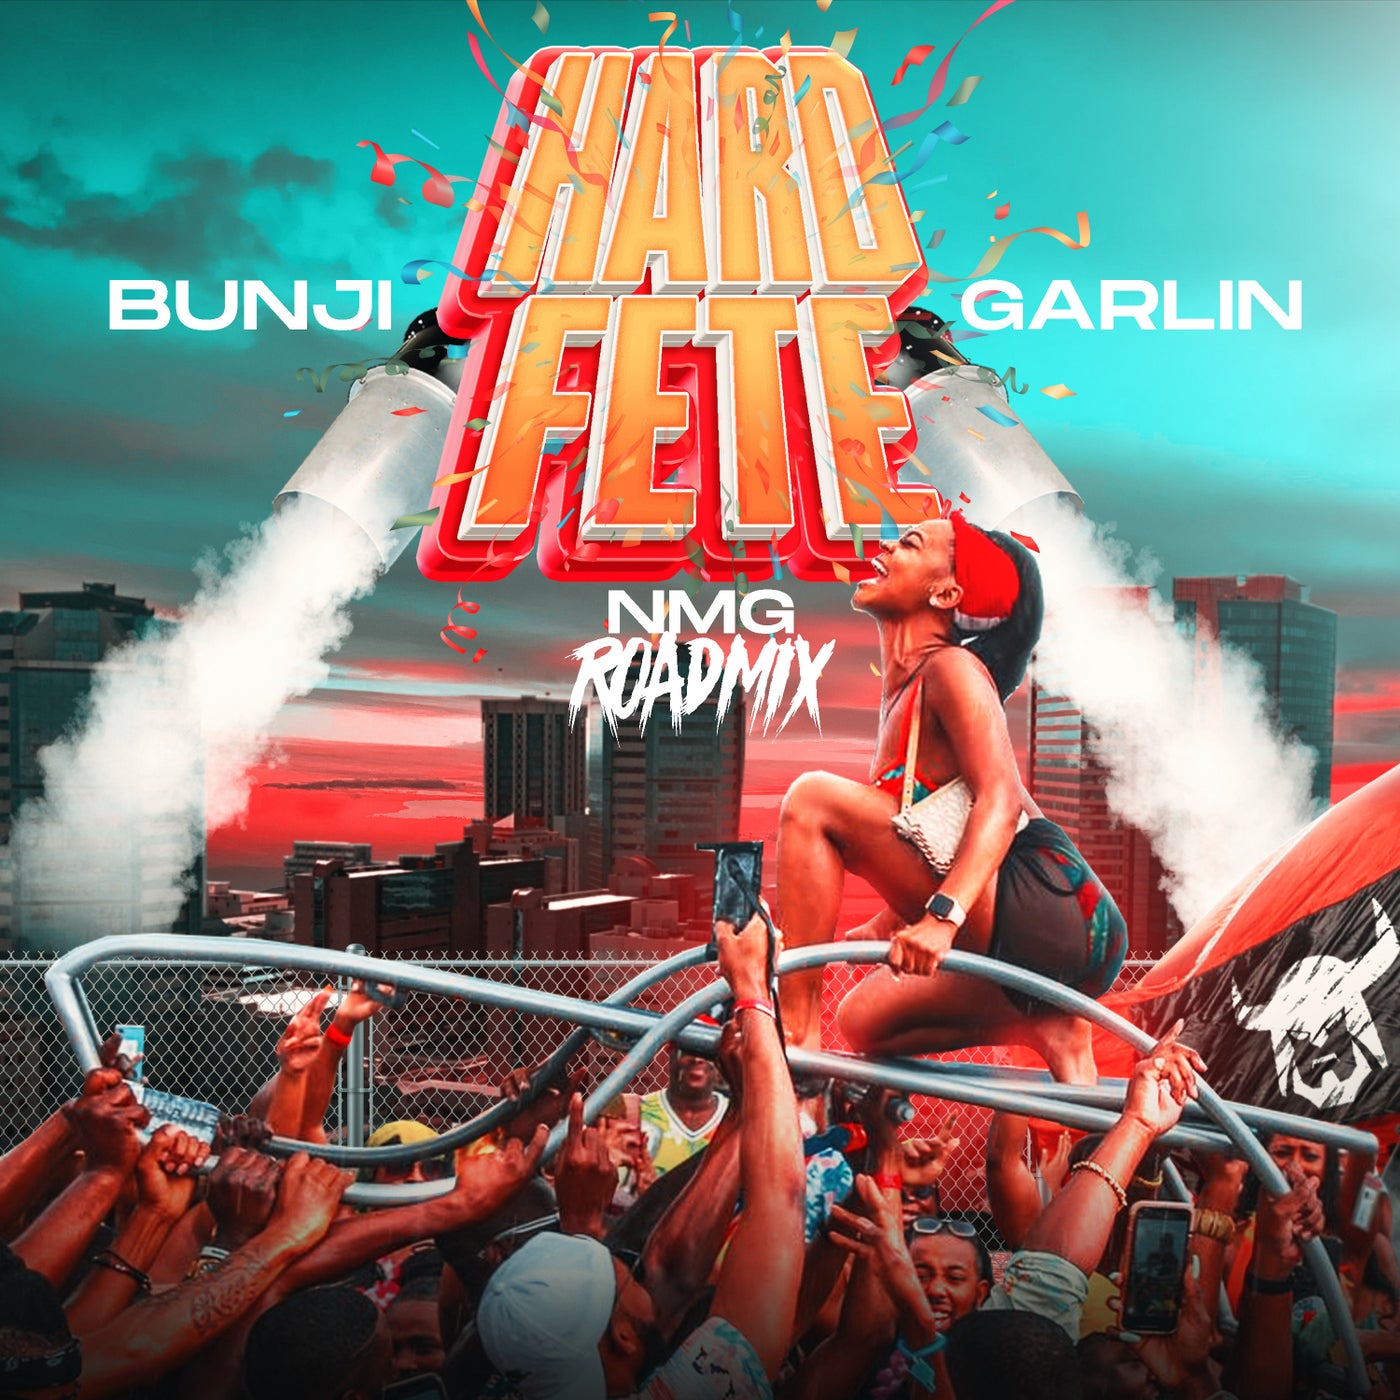 Hard Fete (N.M.G Roadmix) by Bunji Garlin on Beatsource